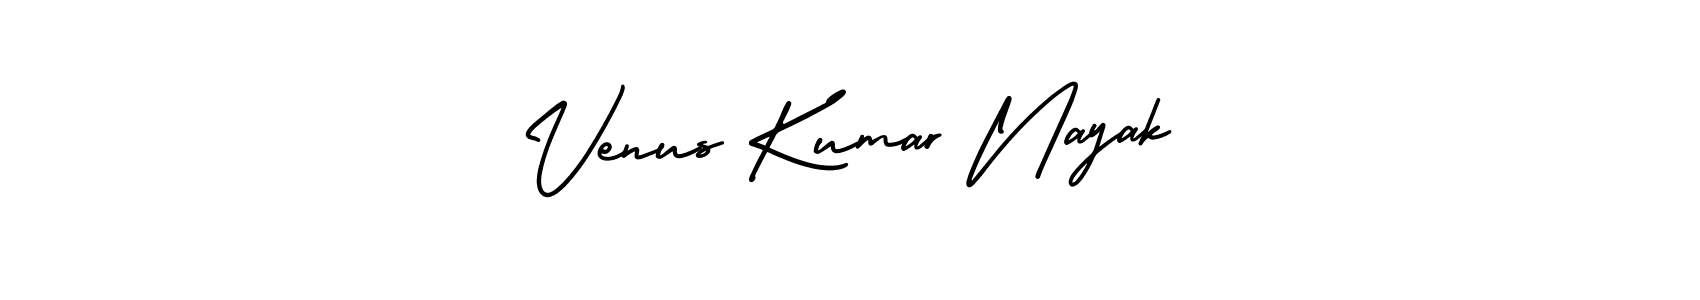 How to Draw Venus Kumar Nayak signature style? AmerikaSignatureDemo-Regular is a latest design signature styles for name Venus Kumar Nayak. Venus Kumar Nayak signature style 3 images and pictures png